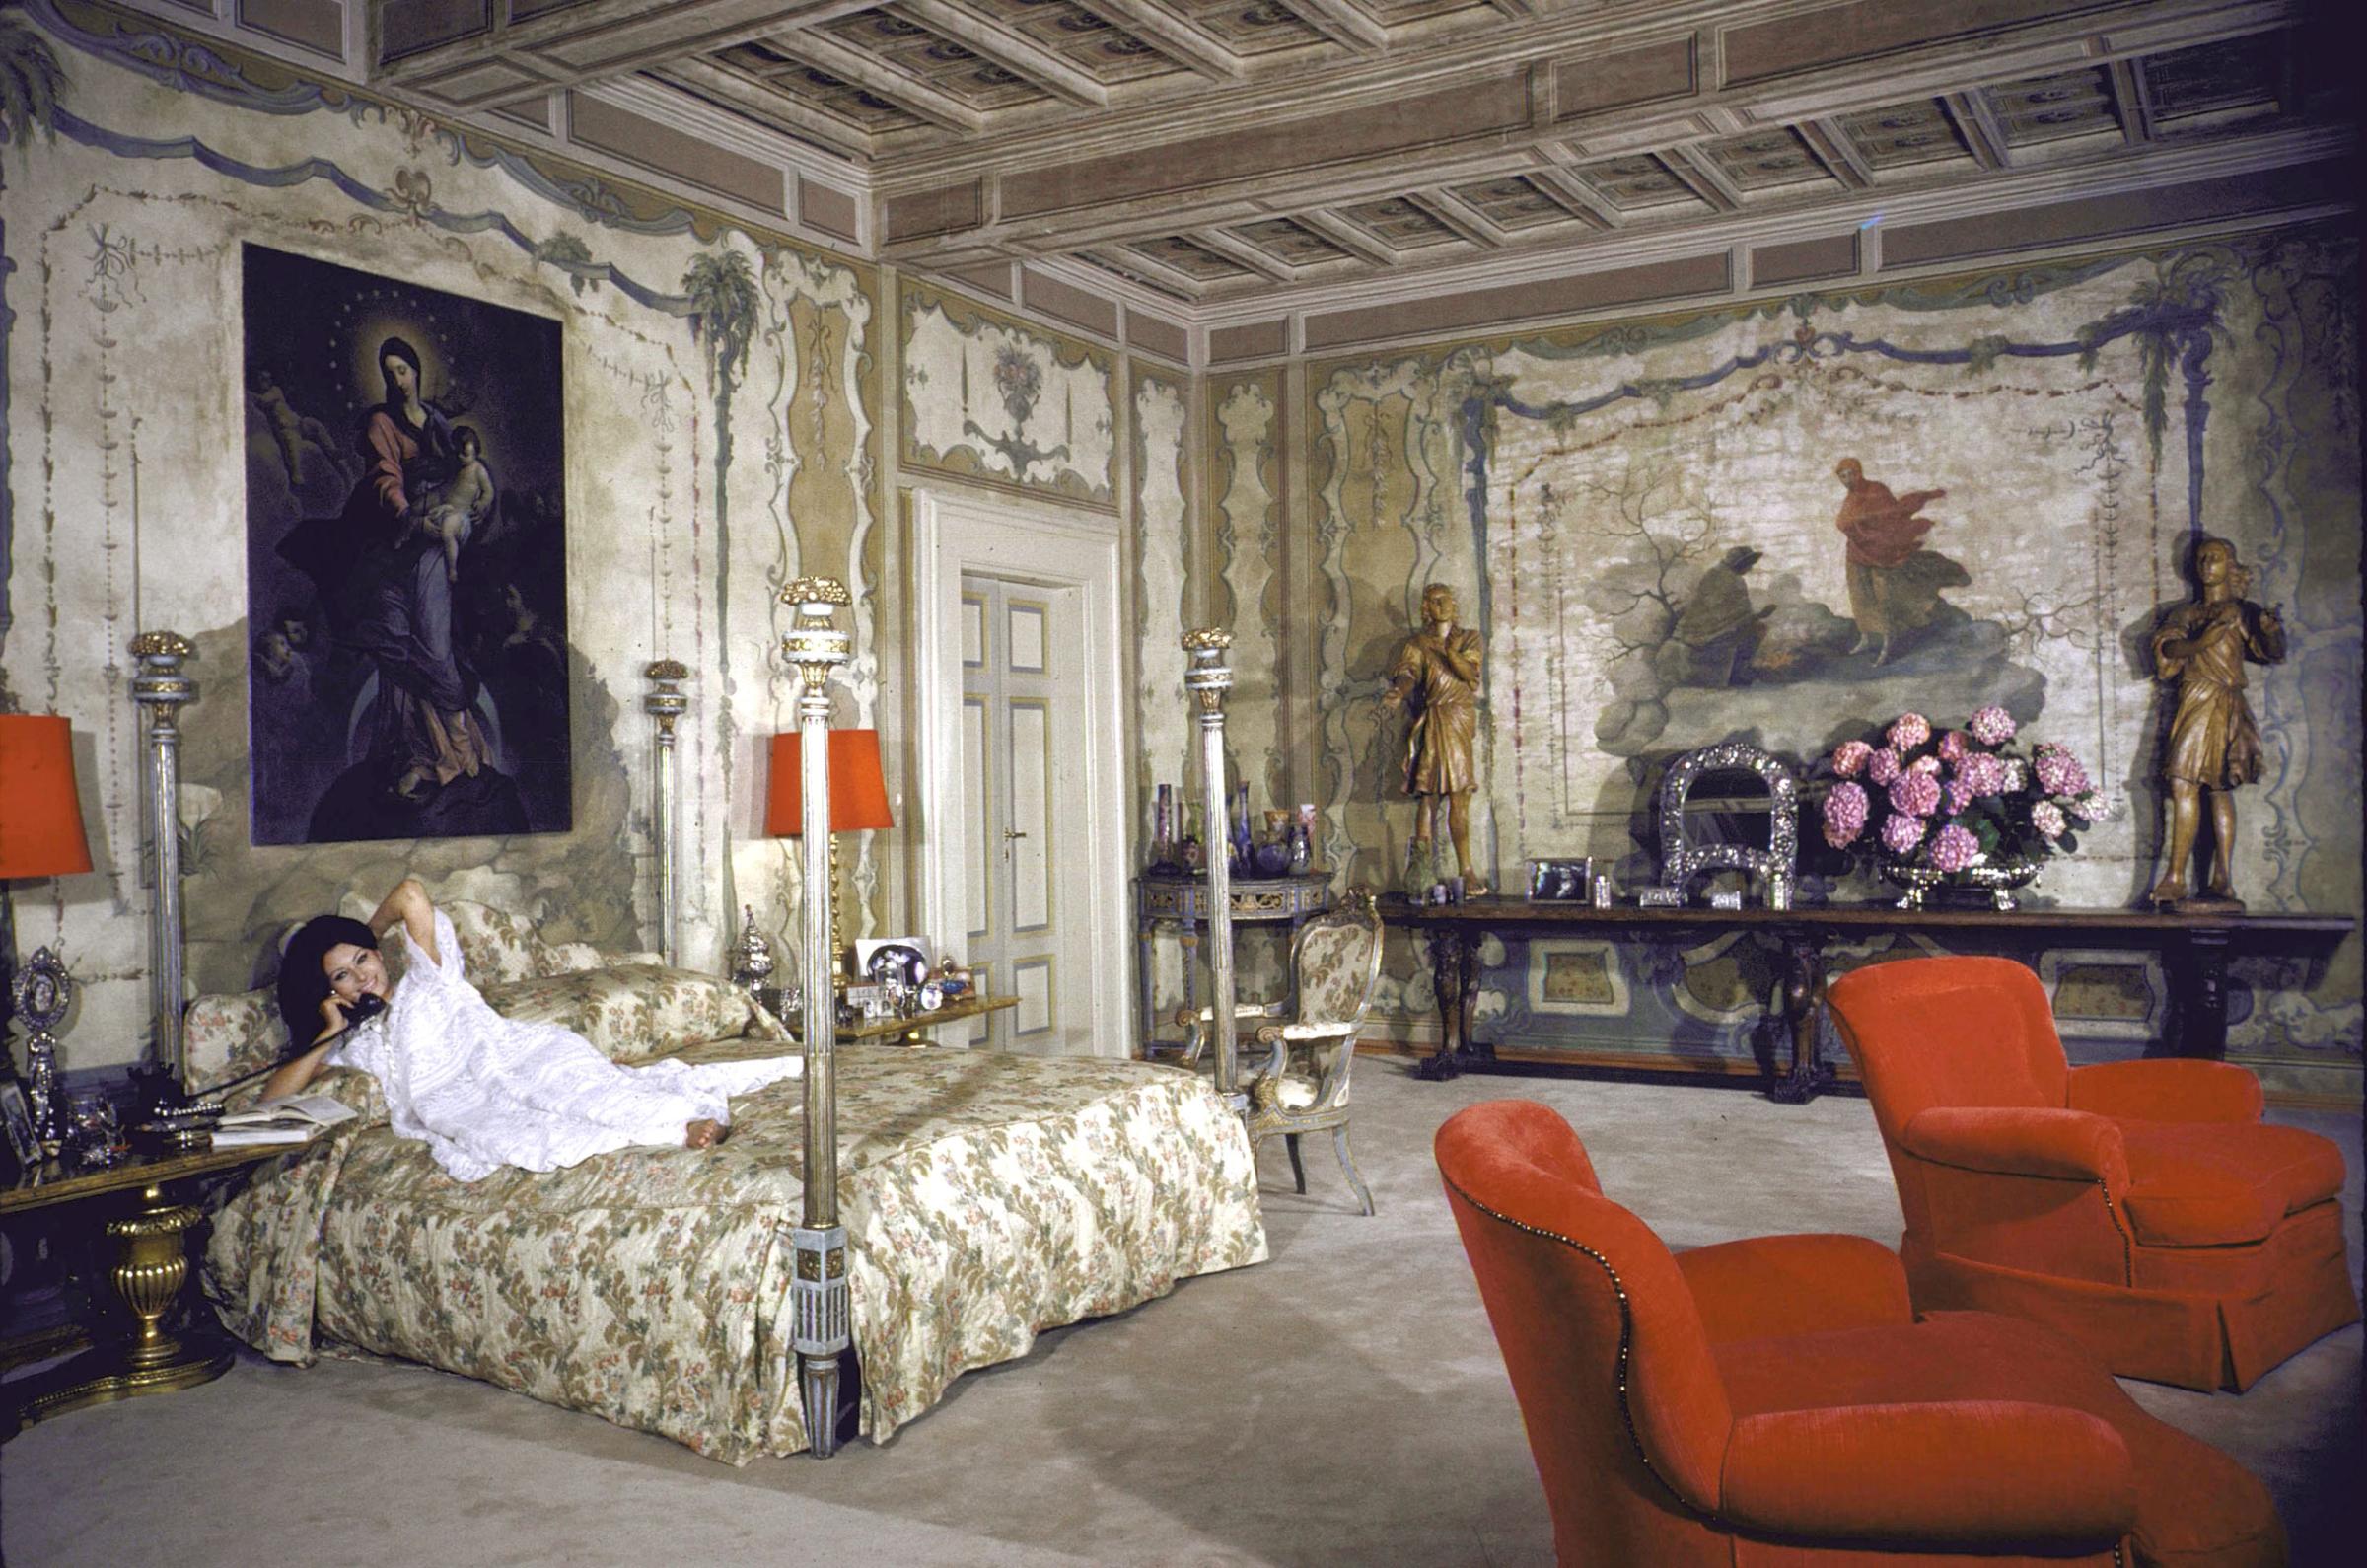 Sophia Loren on her bed in her Italian villa, 1964.